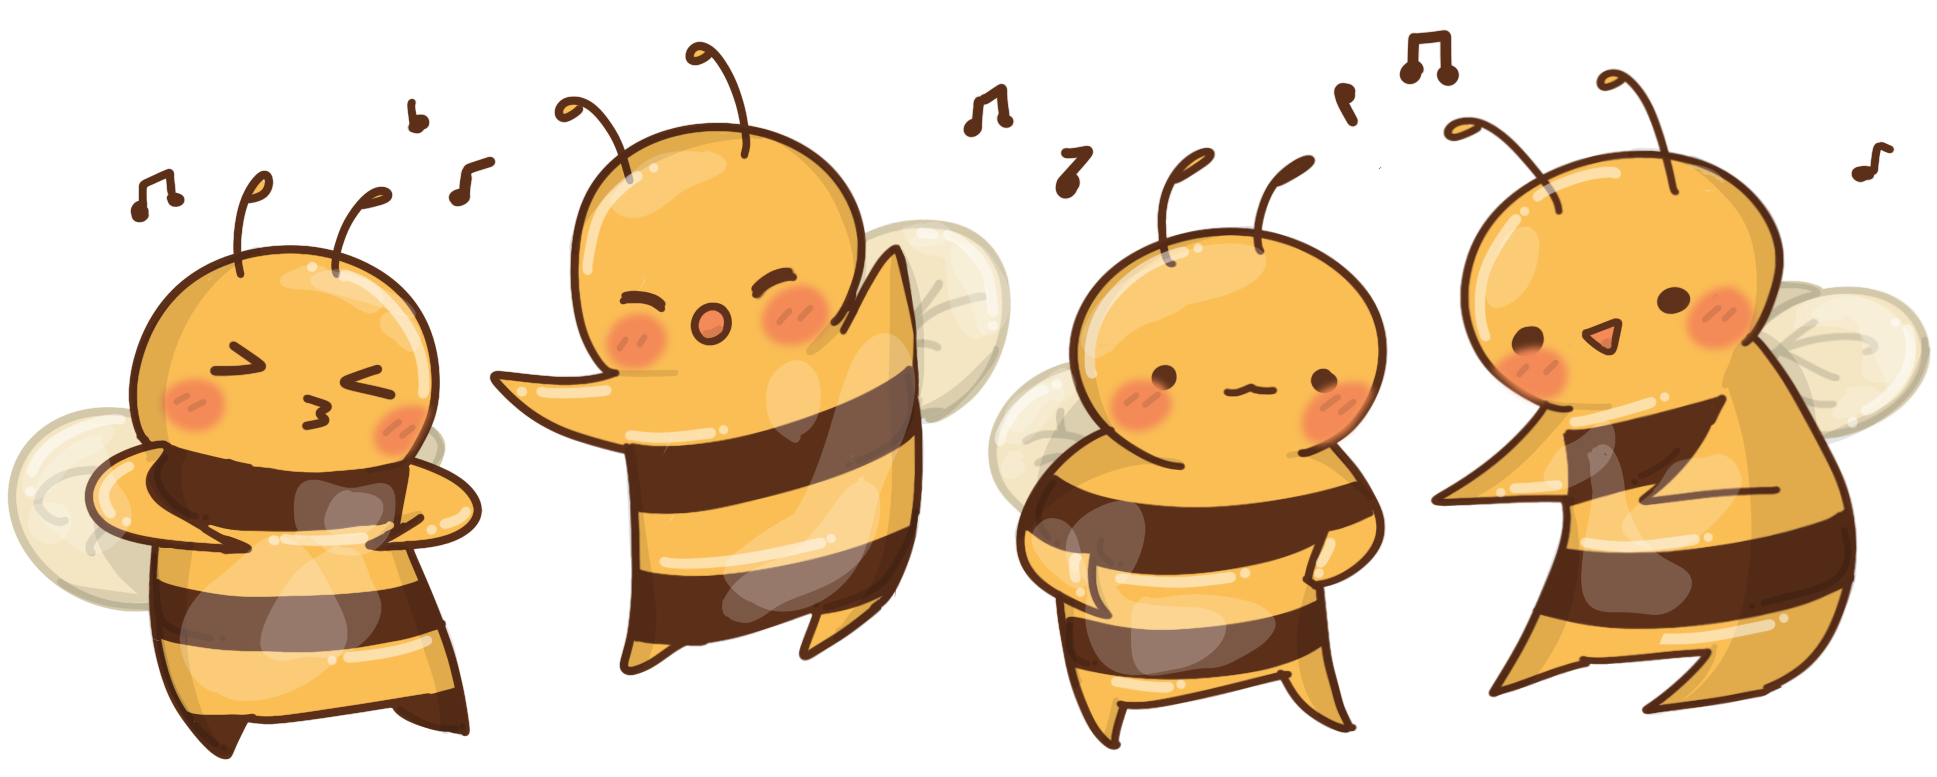 dancey bees faithdr 1